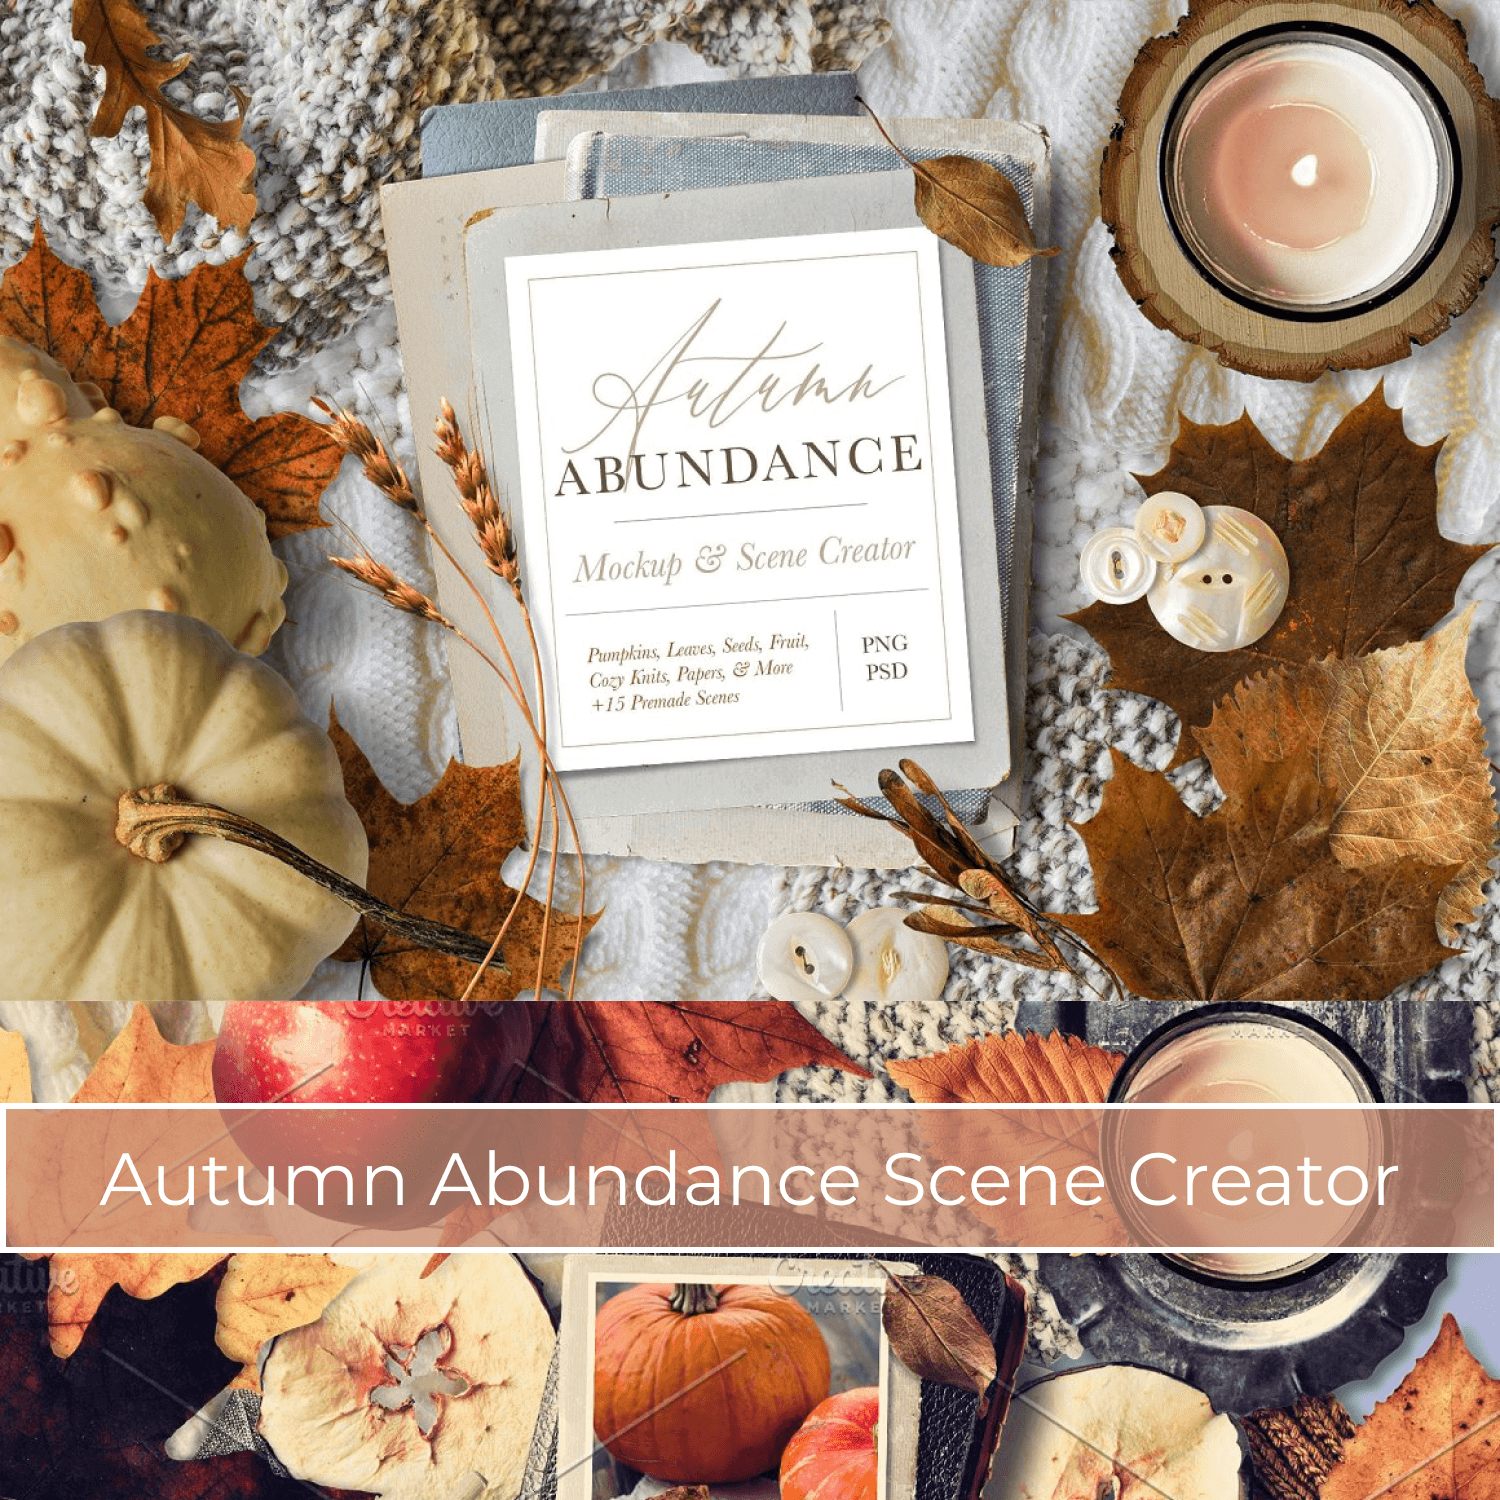 Autumn Abundance Mockup and Scene Creator.